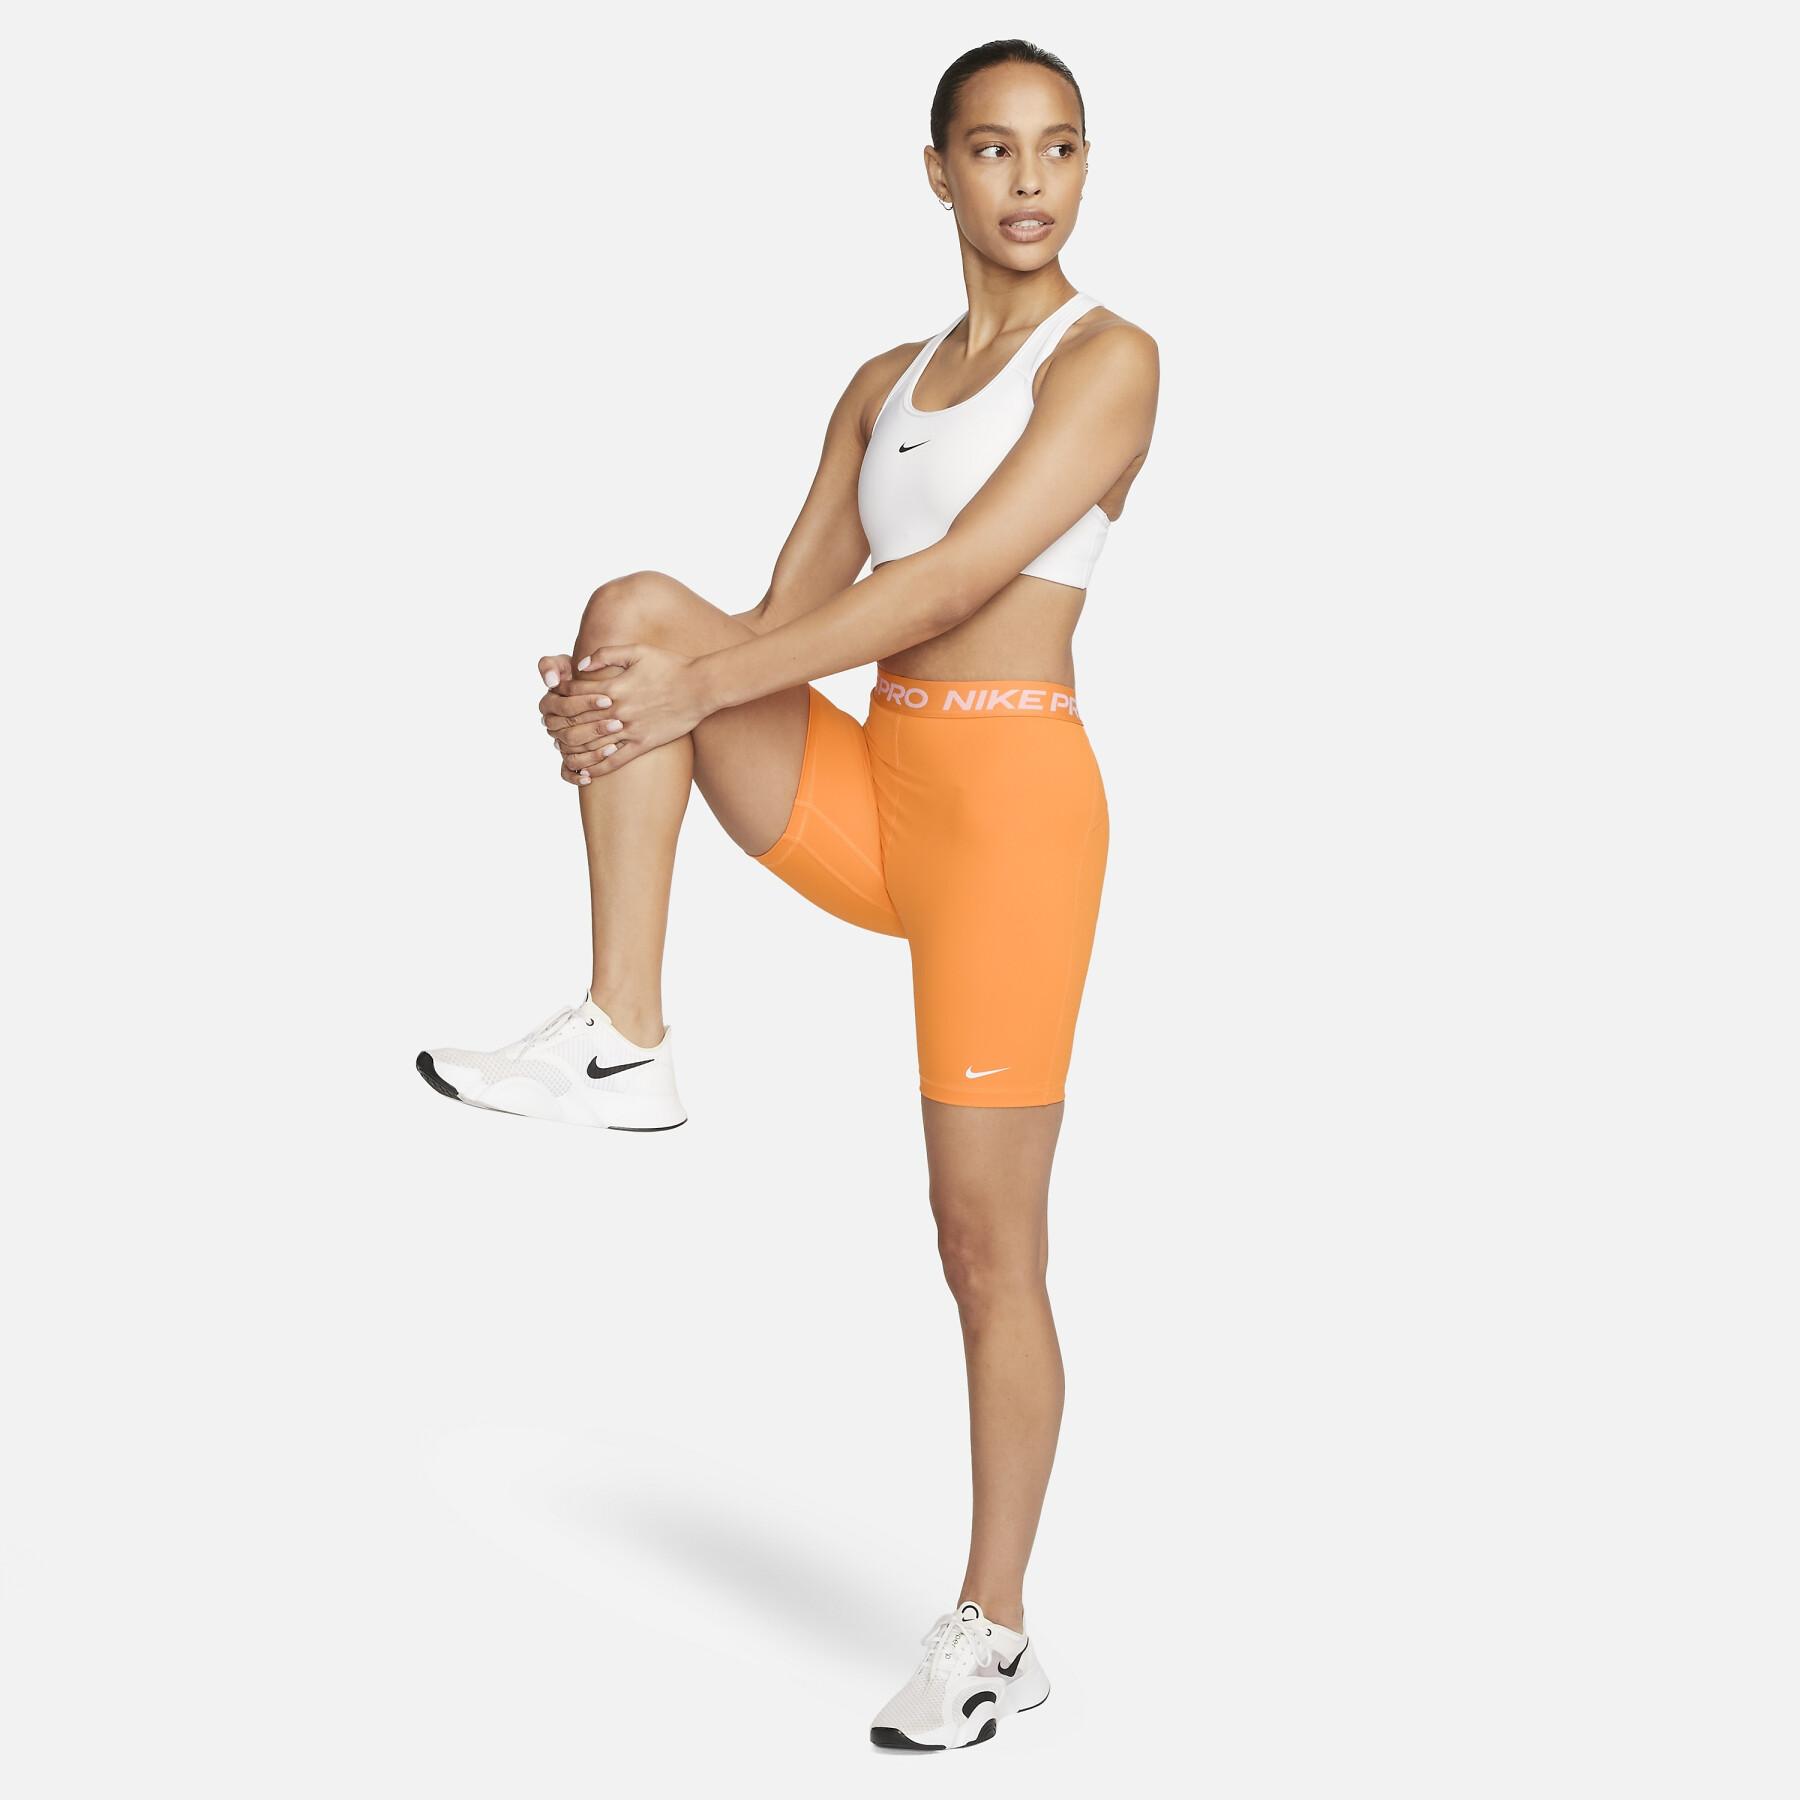 Women's thigh-high boots Nike Pro 365